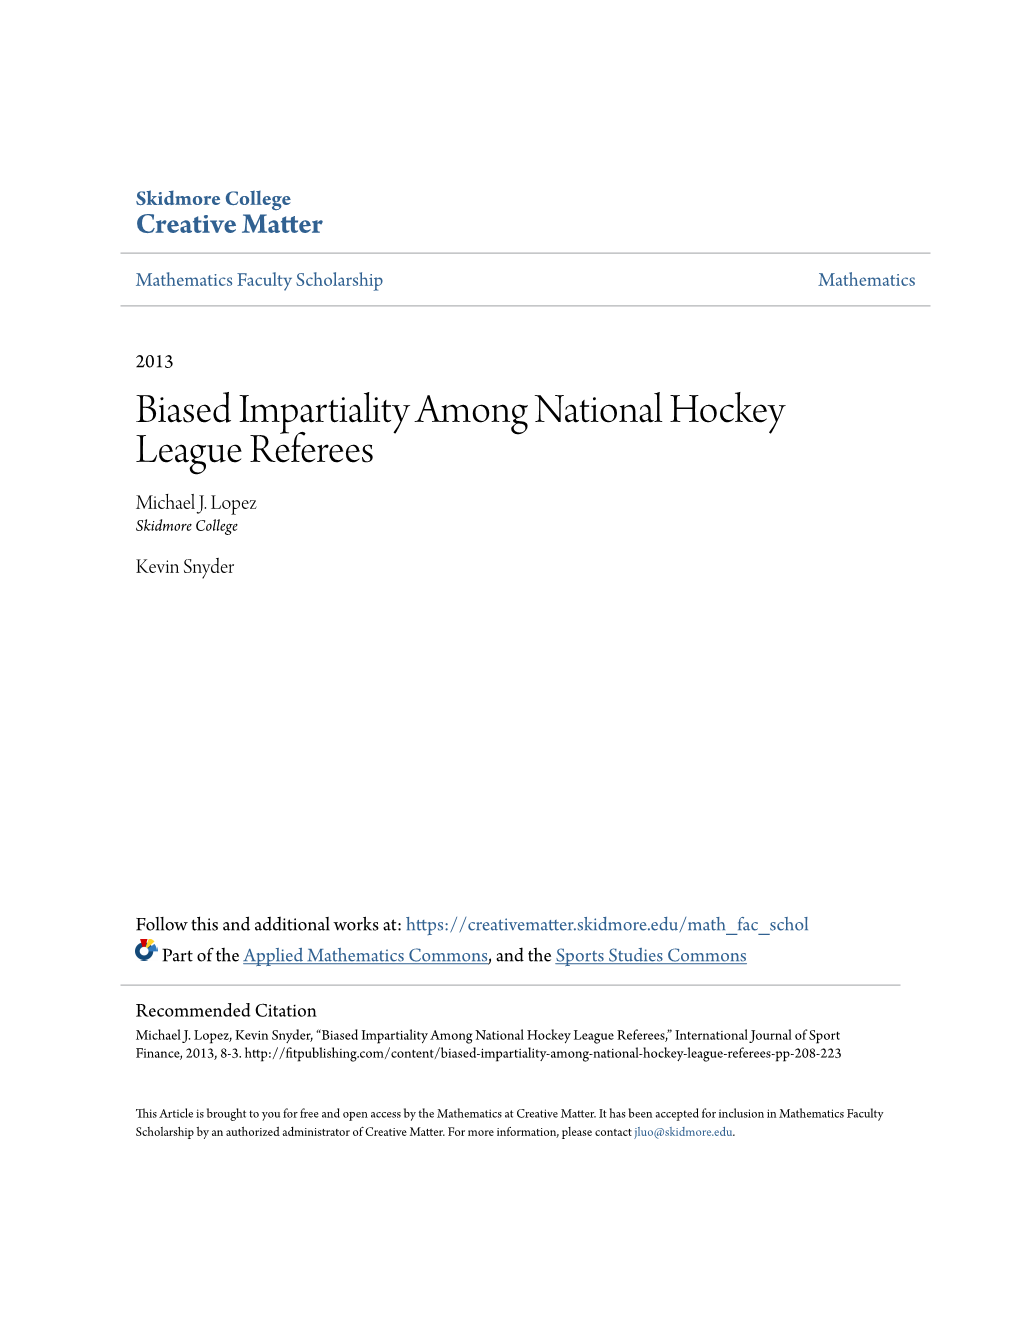 Biased Impartiality Among National Hockey League Referees Michael J